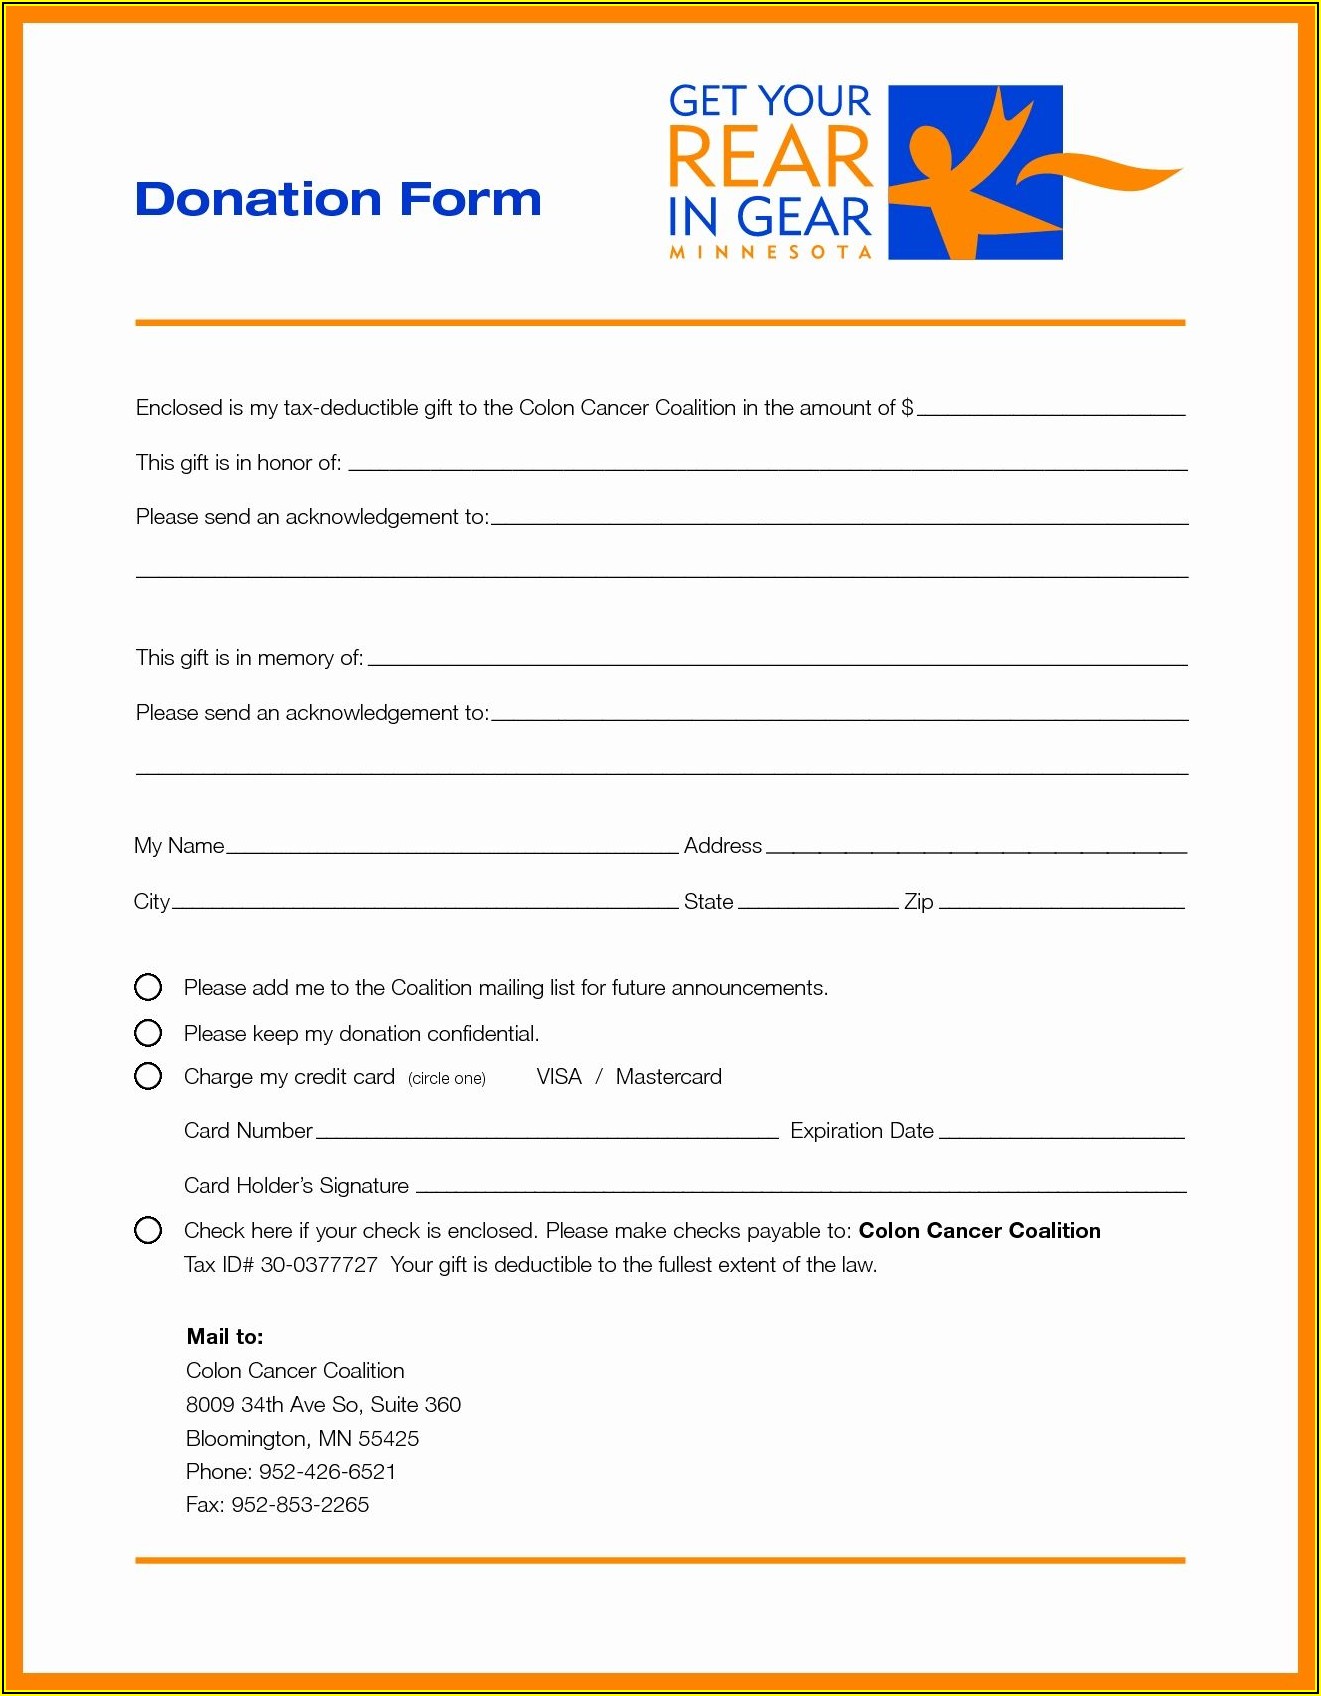 Fundraising Pledge Form Sample